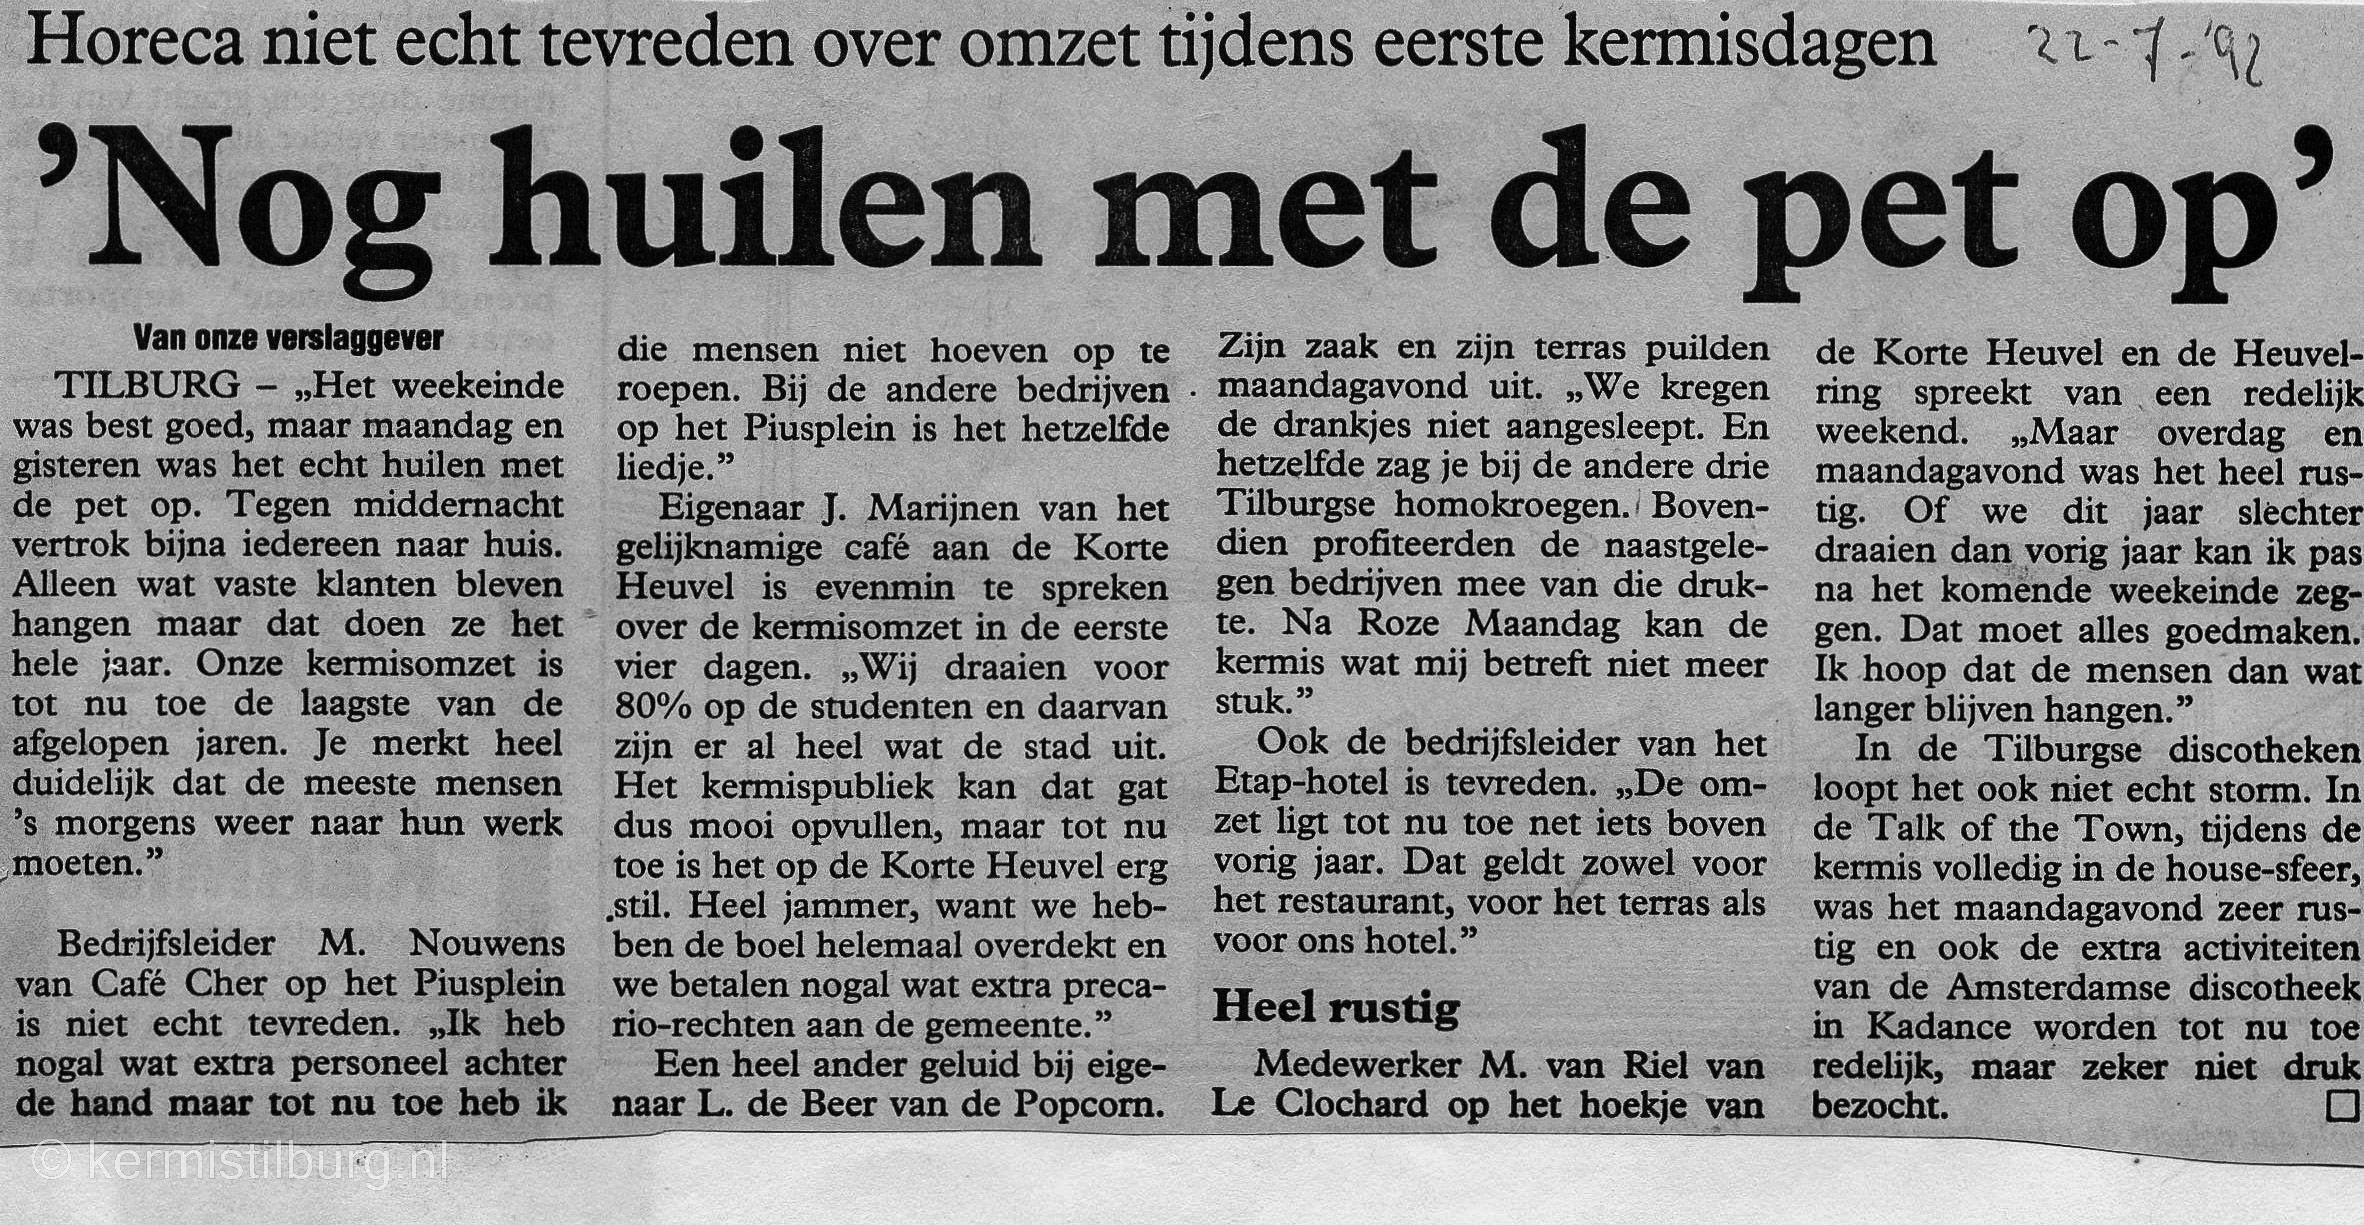 1992, Kermis, Tilburg, Tilburgse kermis